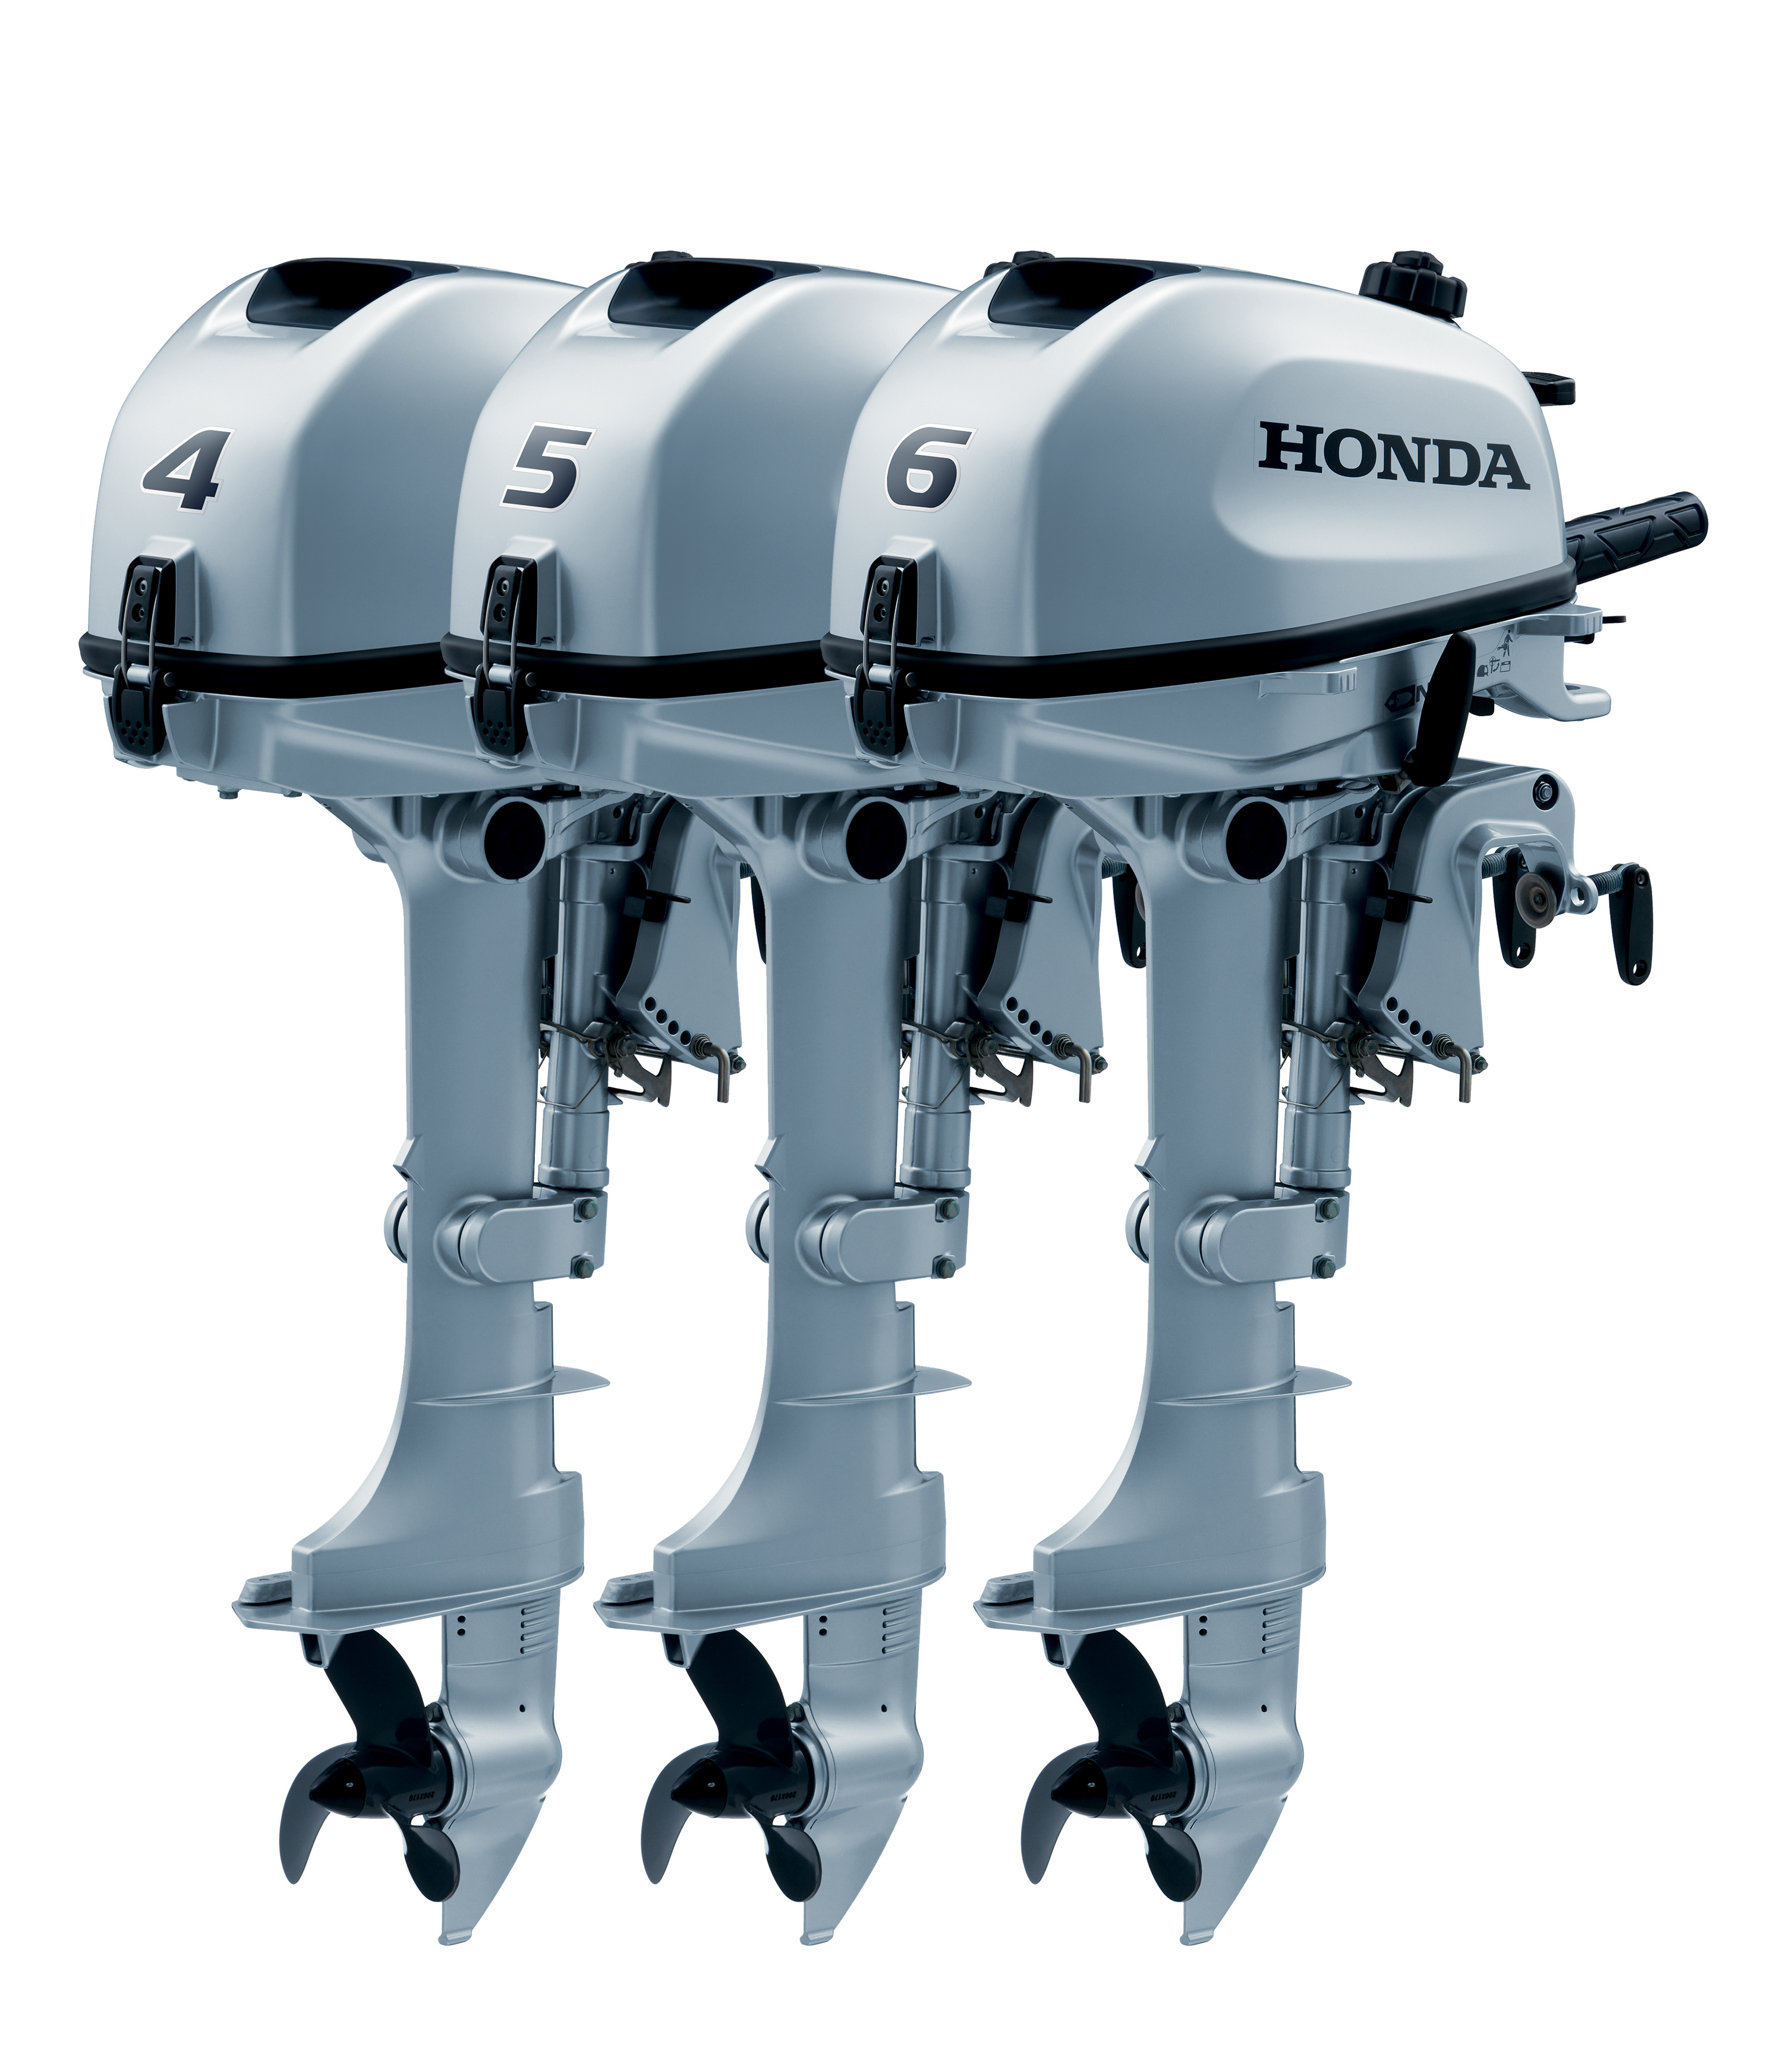 Лодочный мотор пятерка. Лодочный мотор Honda 5. Лодочный мотор Honda 6. Honda bf6. Лодочный мотор Хонда four stroke 5.